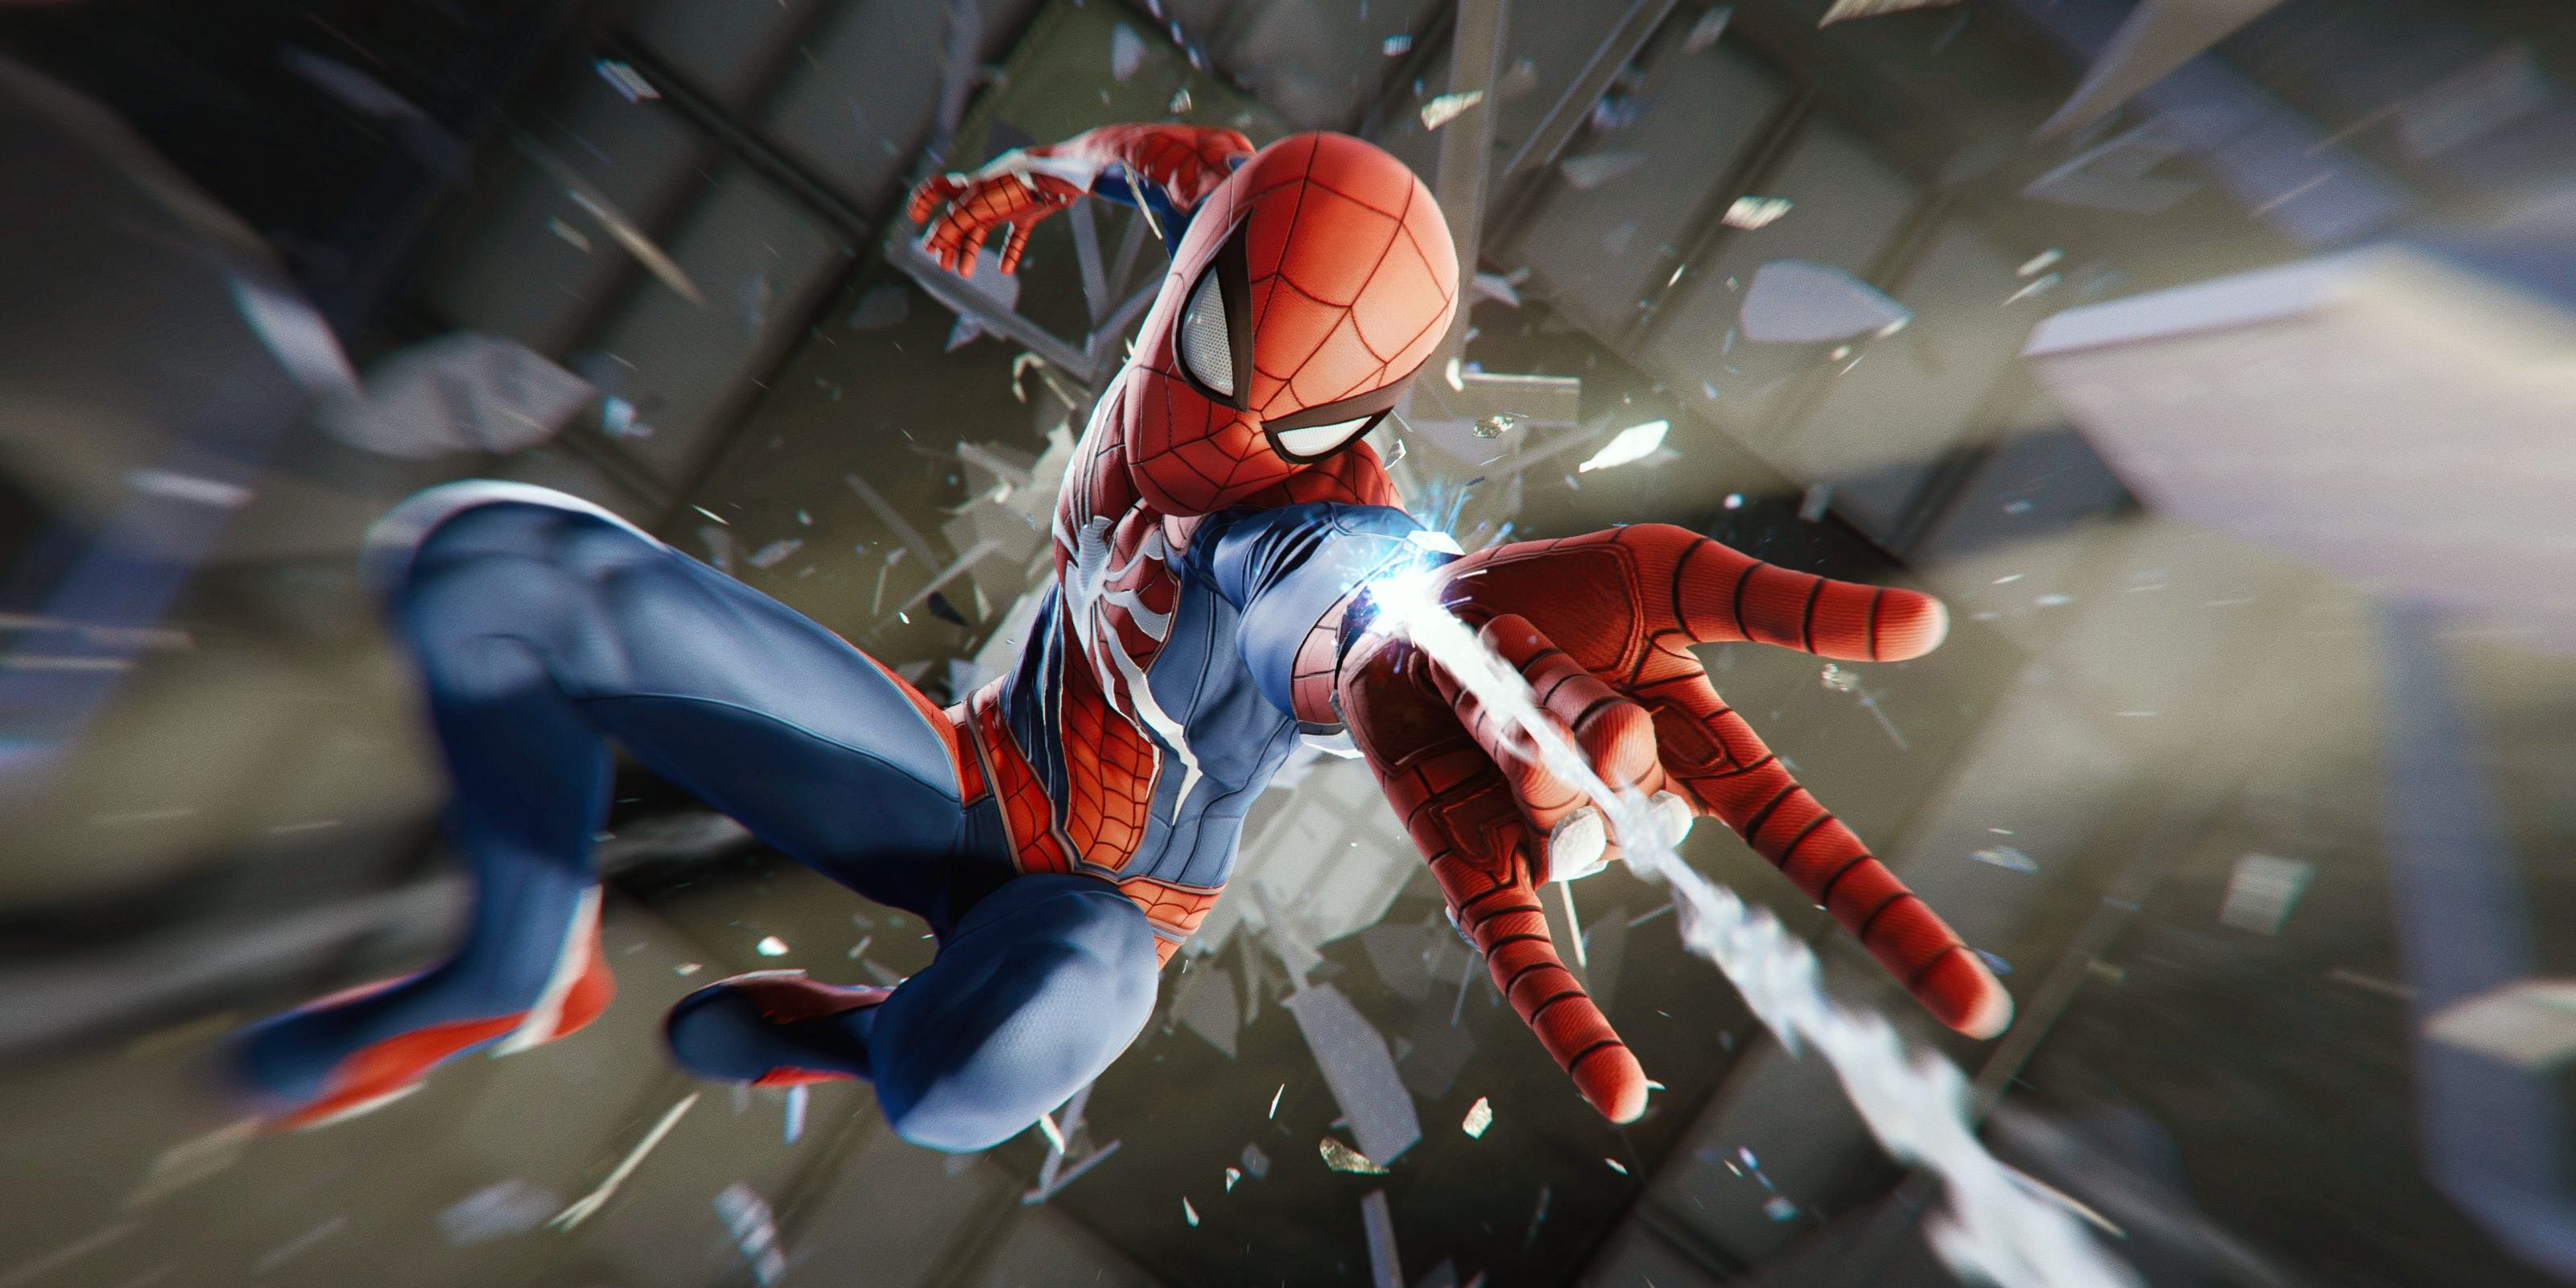 Promotional image of Spider-Man for Marvel's Spider-Man